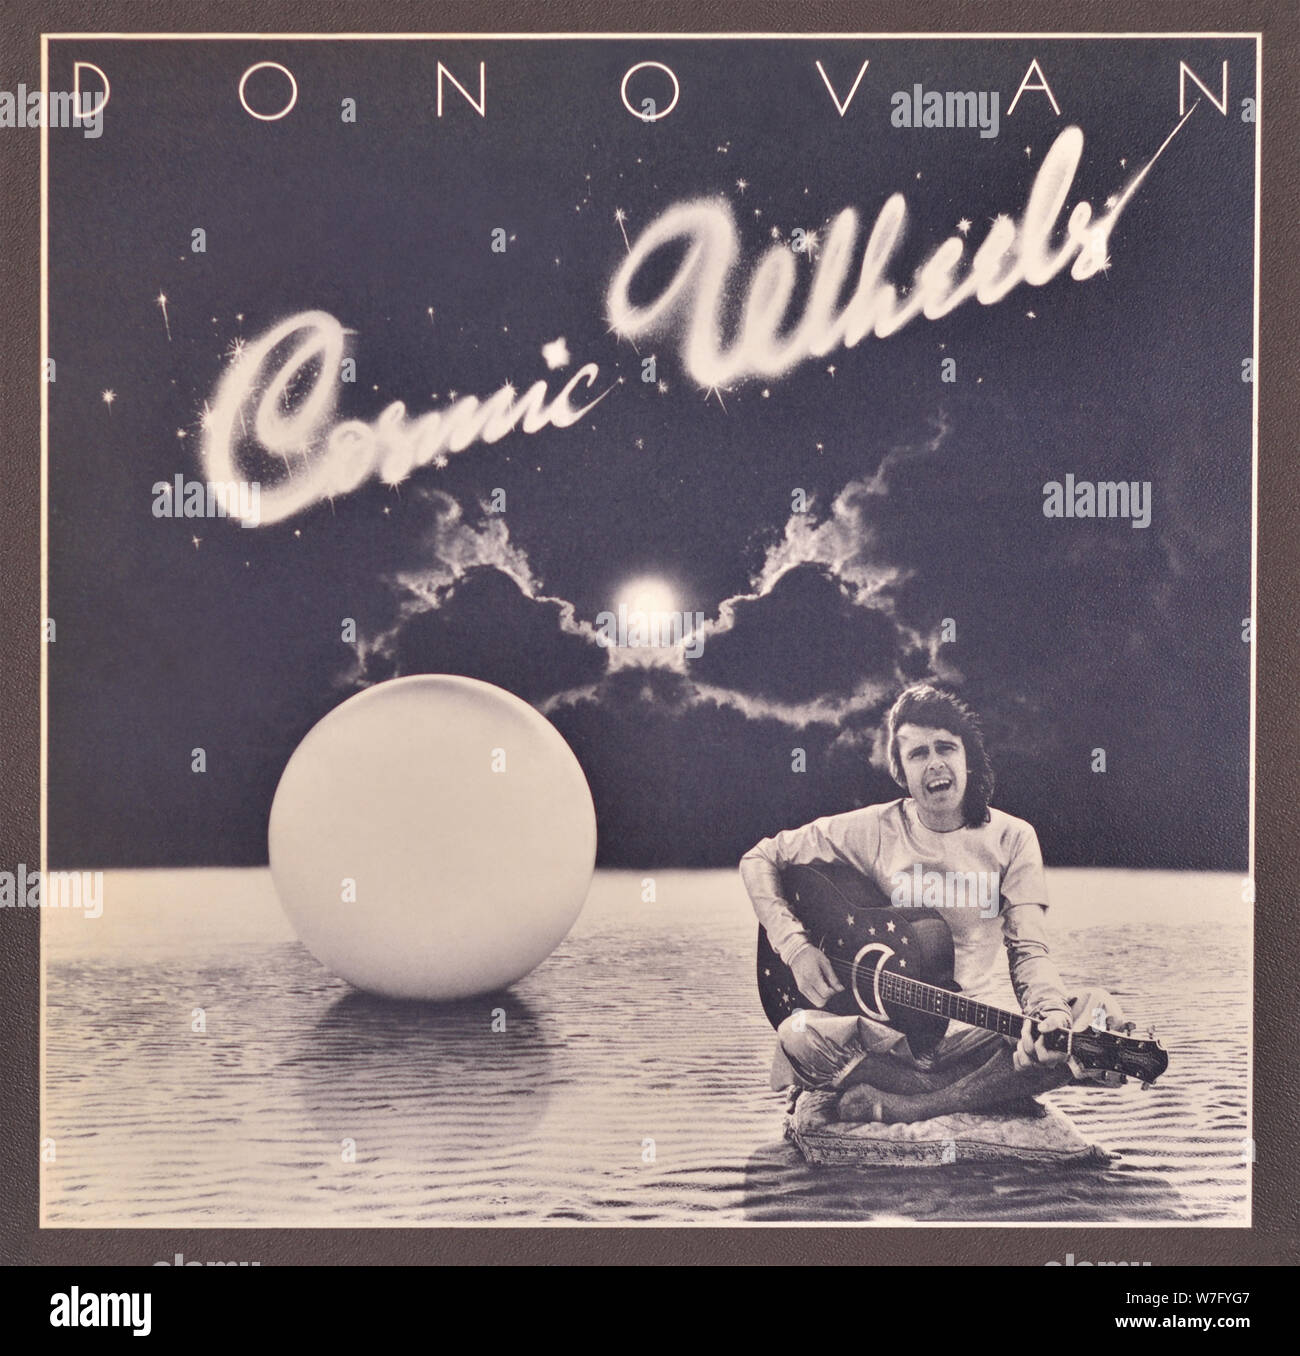 Donovan - original Vinyl Album Cover - Cosmic Wheels - 1994 Stockfoto